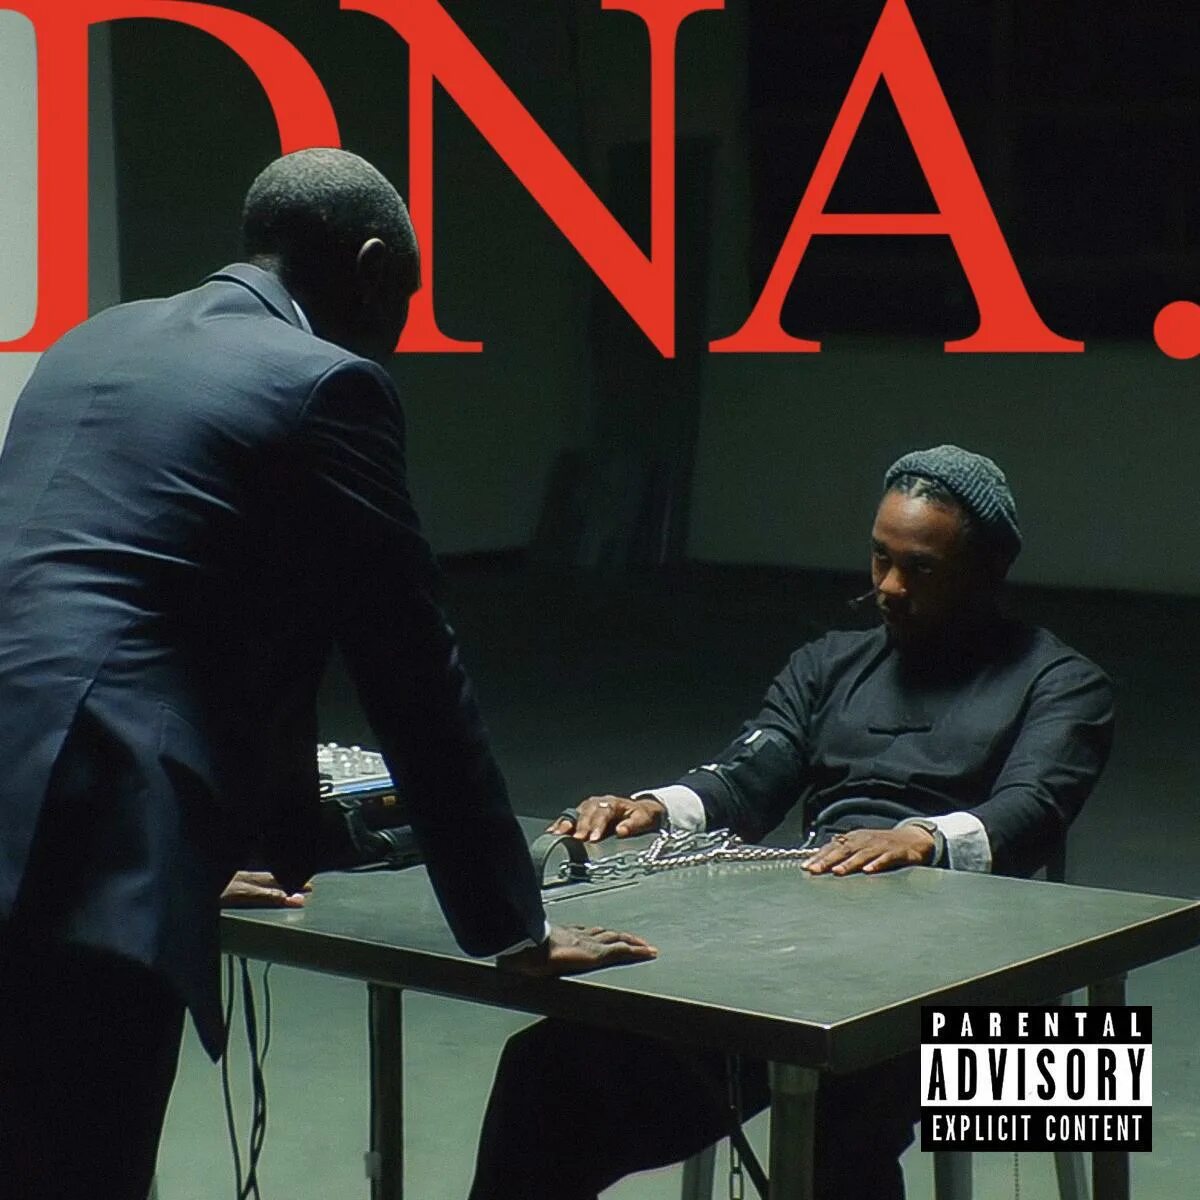 Kendrick Lamar DNA. Kendrick Lamar DNA обложка. Kendrick Lamar damn обложка. Kendrick Lamar album.